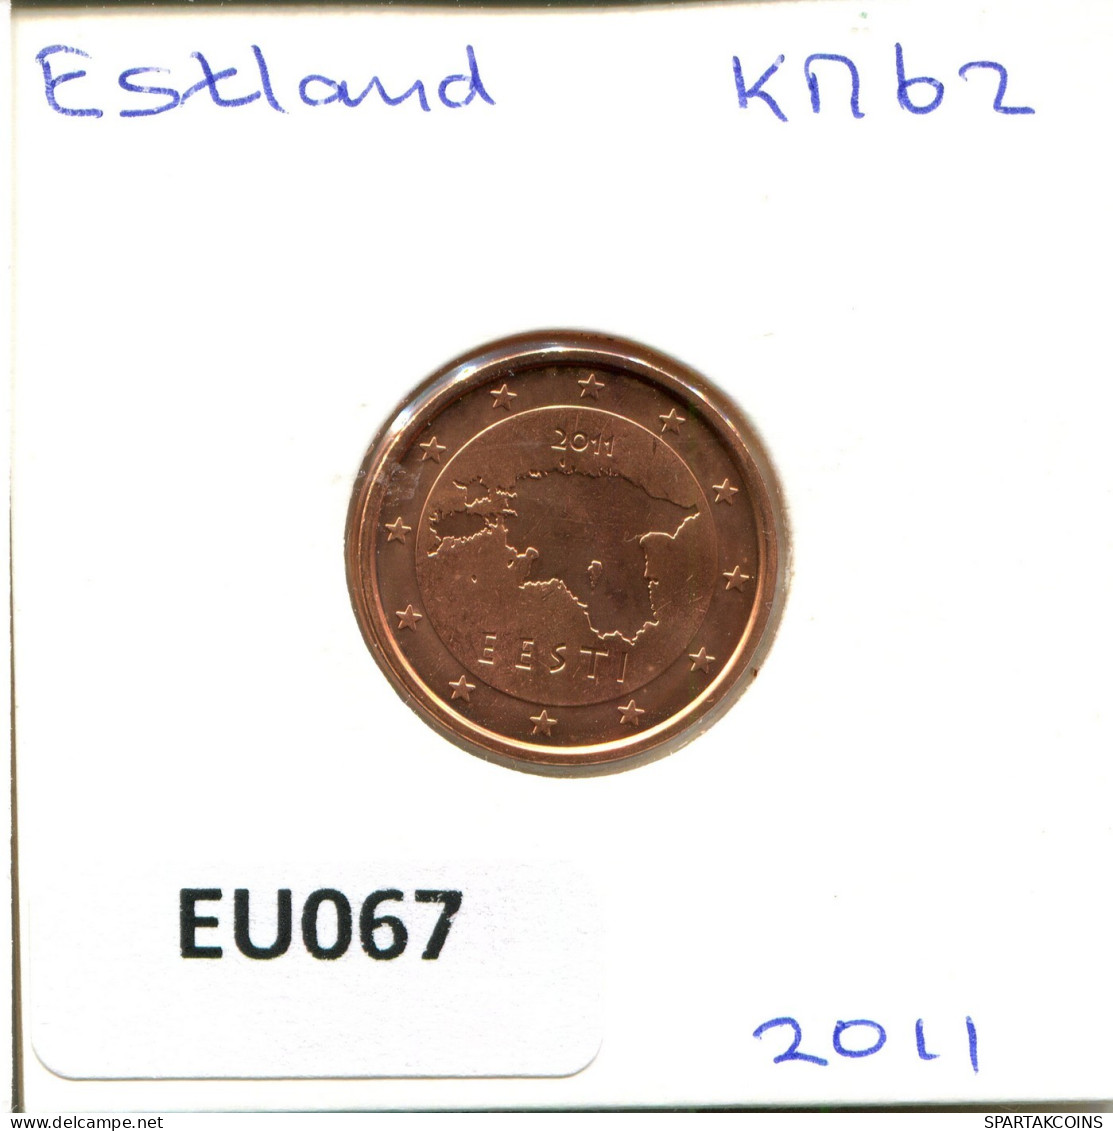 2 EURO CENTS 2011 ESTONIA Coin #EU067.U.A - Estonie